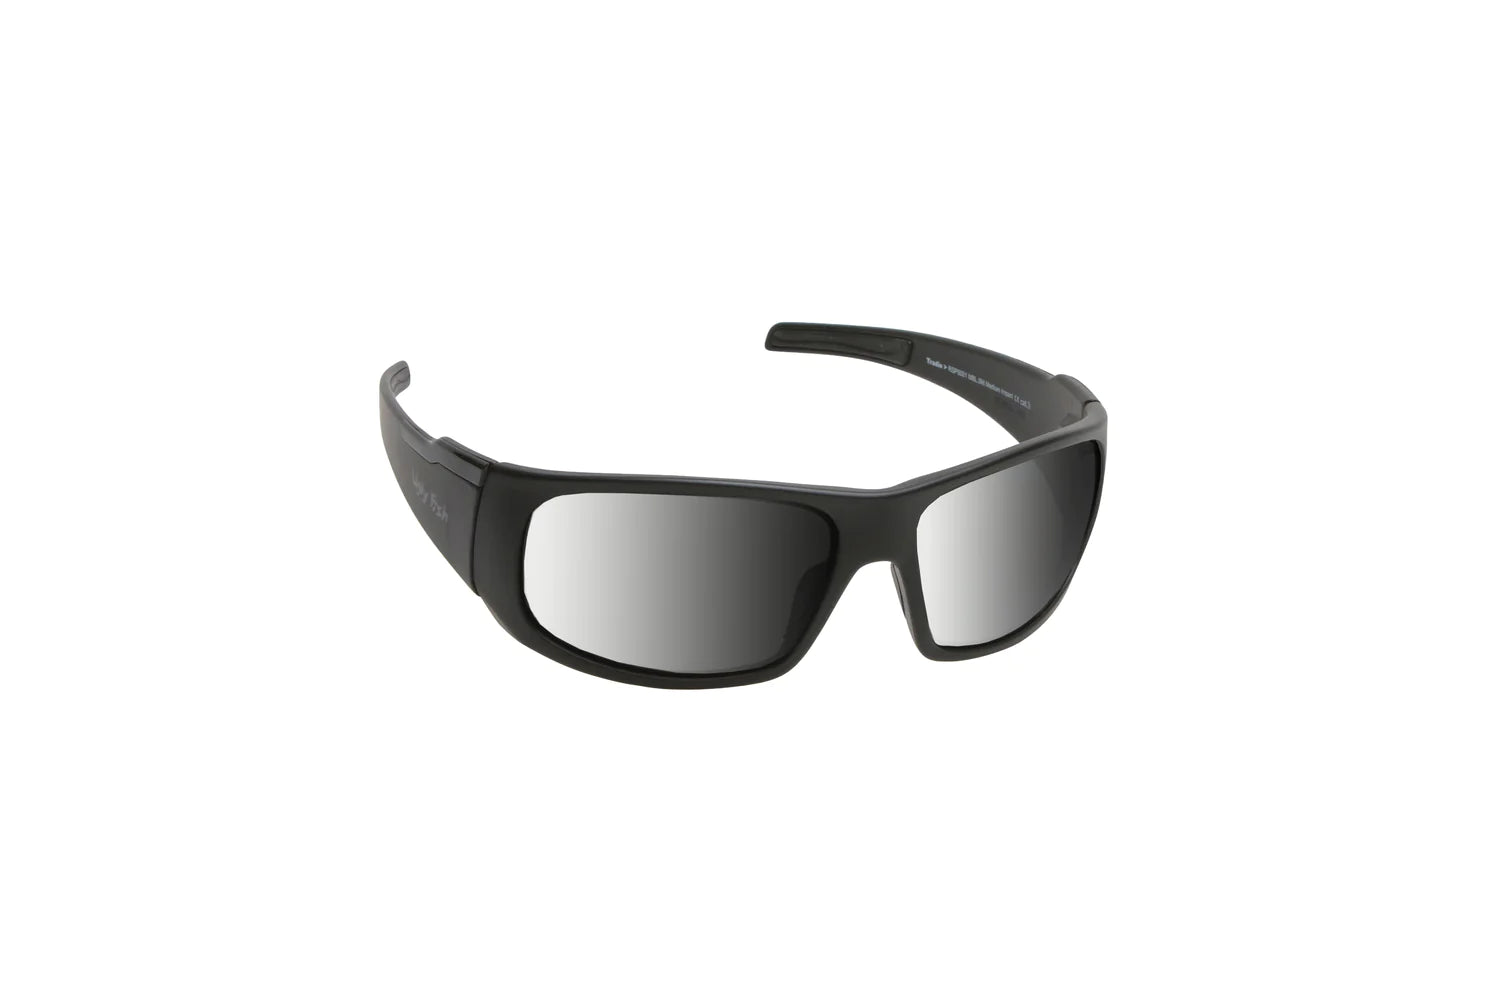 Ugly Fish RSPH5001 MBL.C/SM Tradie Photochromic Safety Sunglasses- Matt Black Frame/Smoke Photochromic Lens